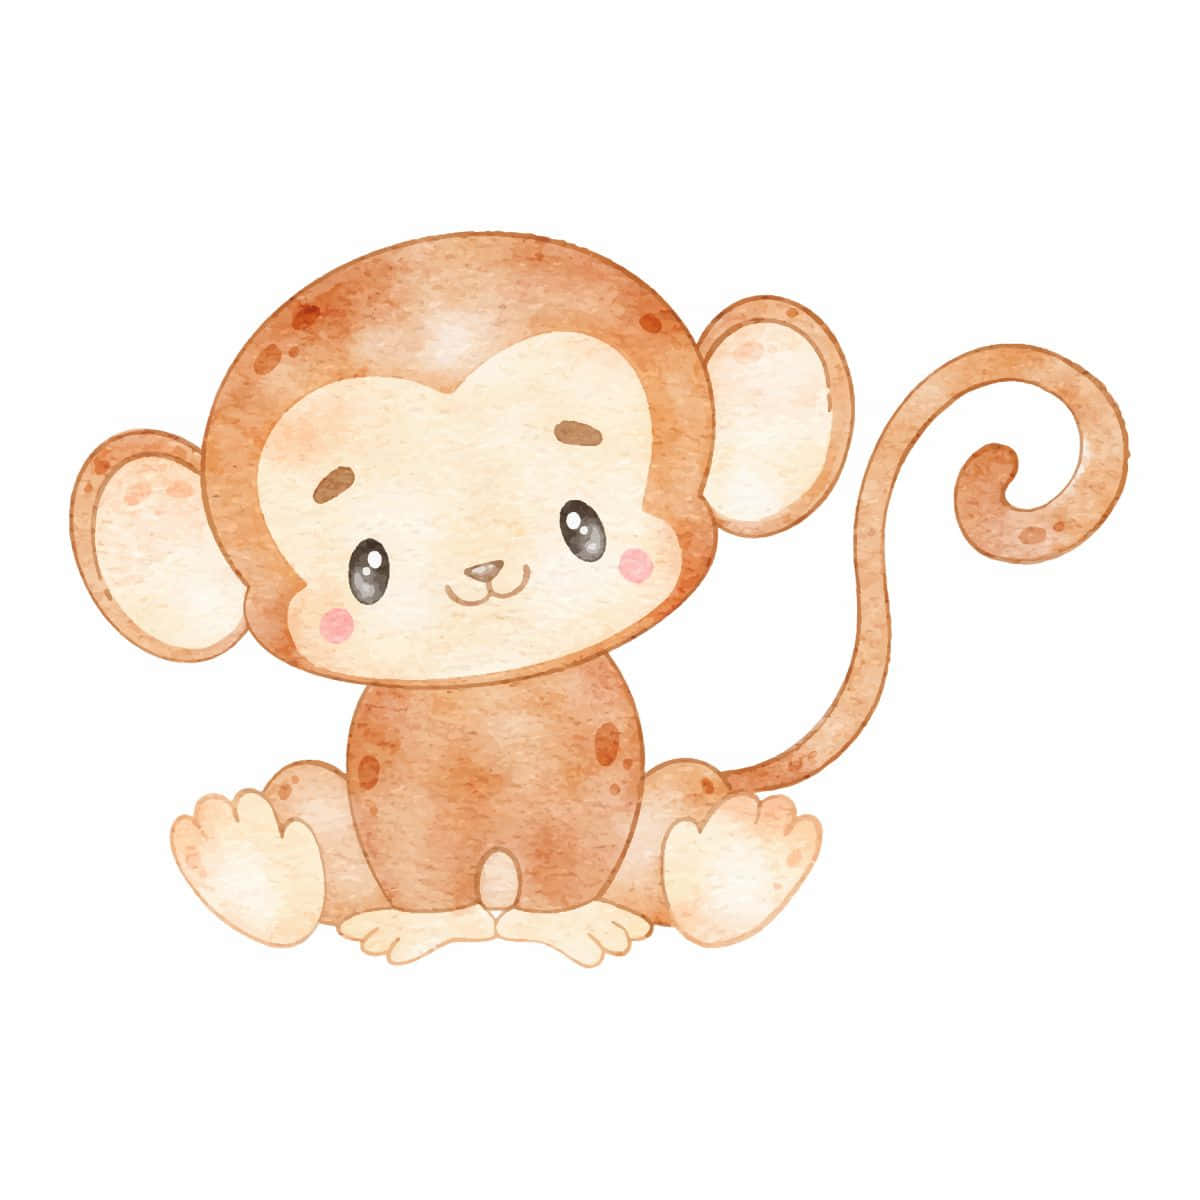 Aww, Look How Cute That Little Monkey Is!